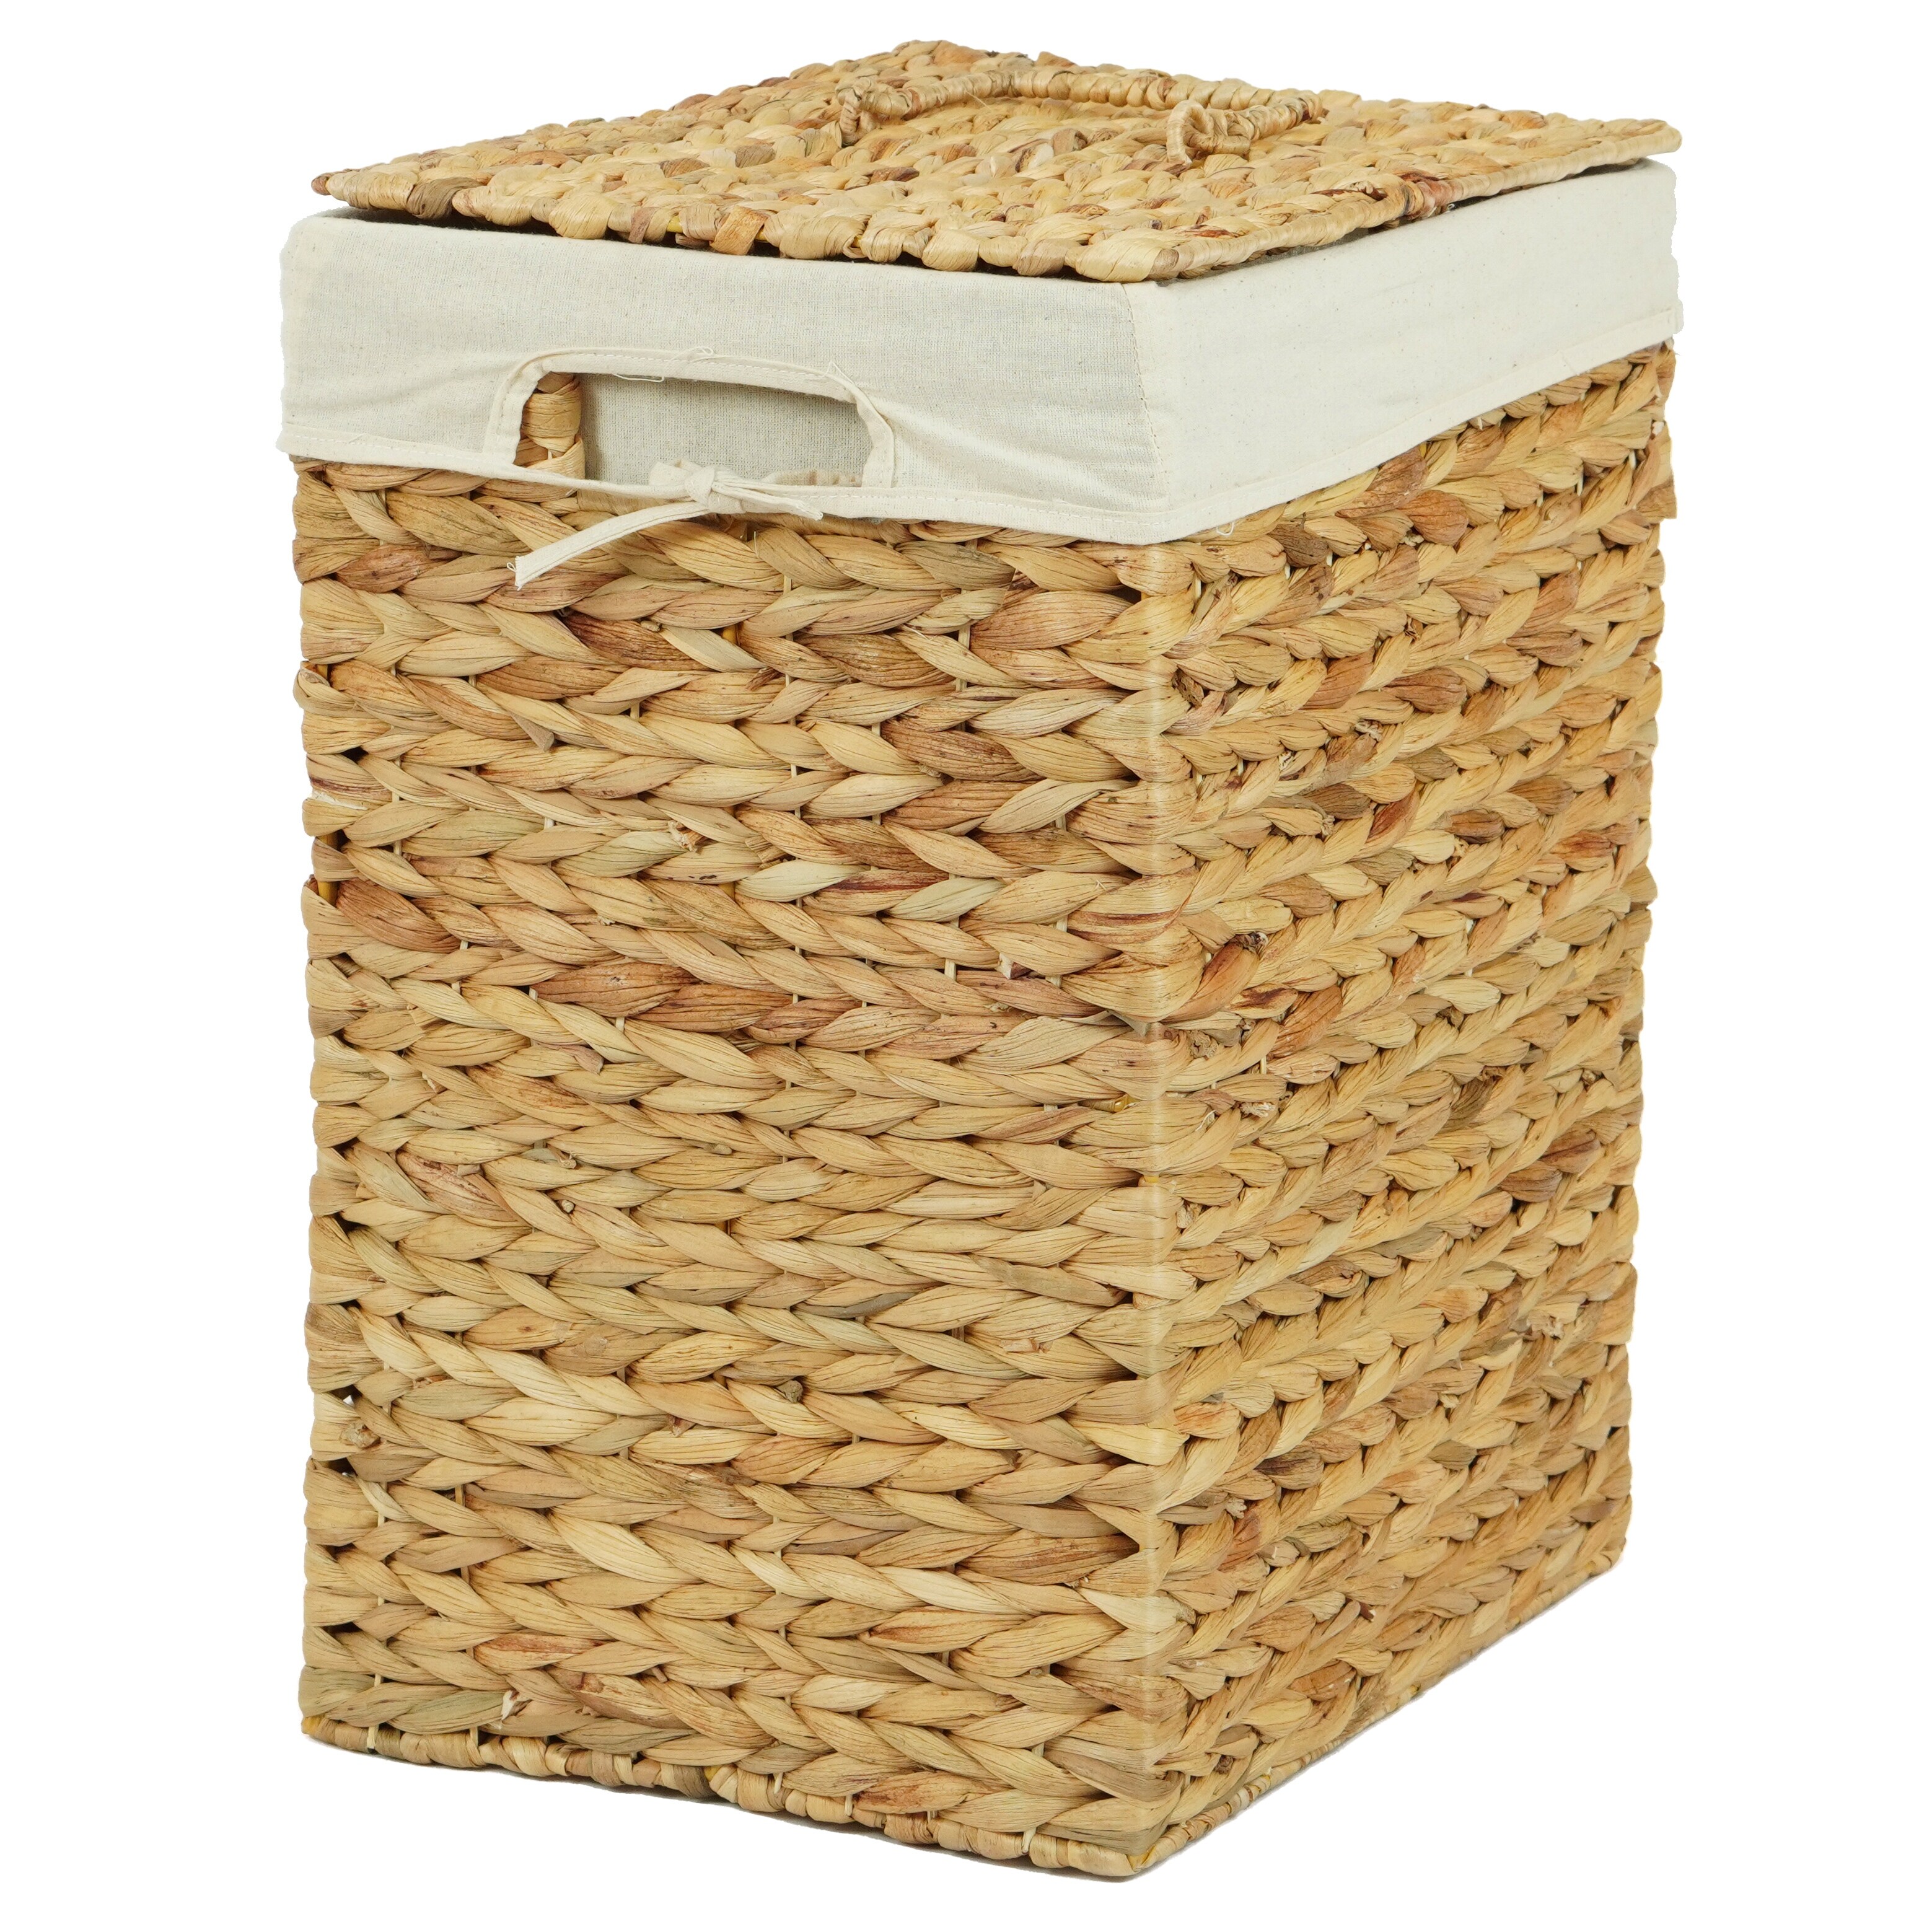 Seville Classics Lidded Foldable Water Hyacinth Portable Rectangular Laundry Hamper Basket with Washable Liner